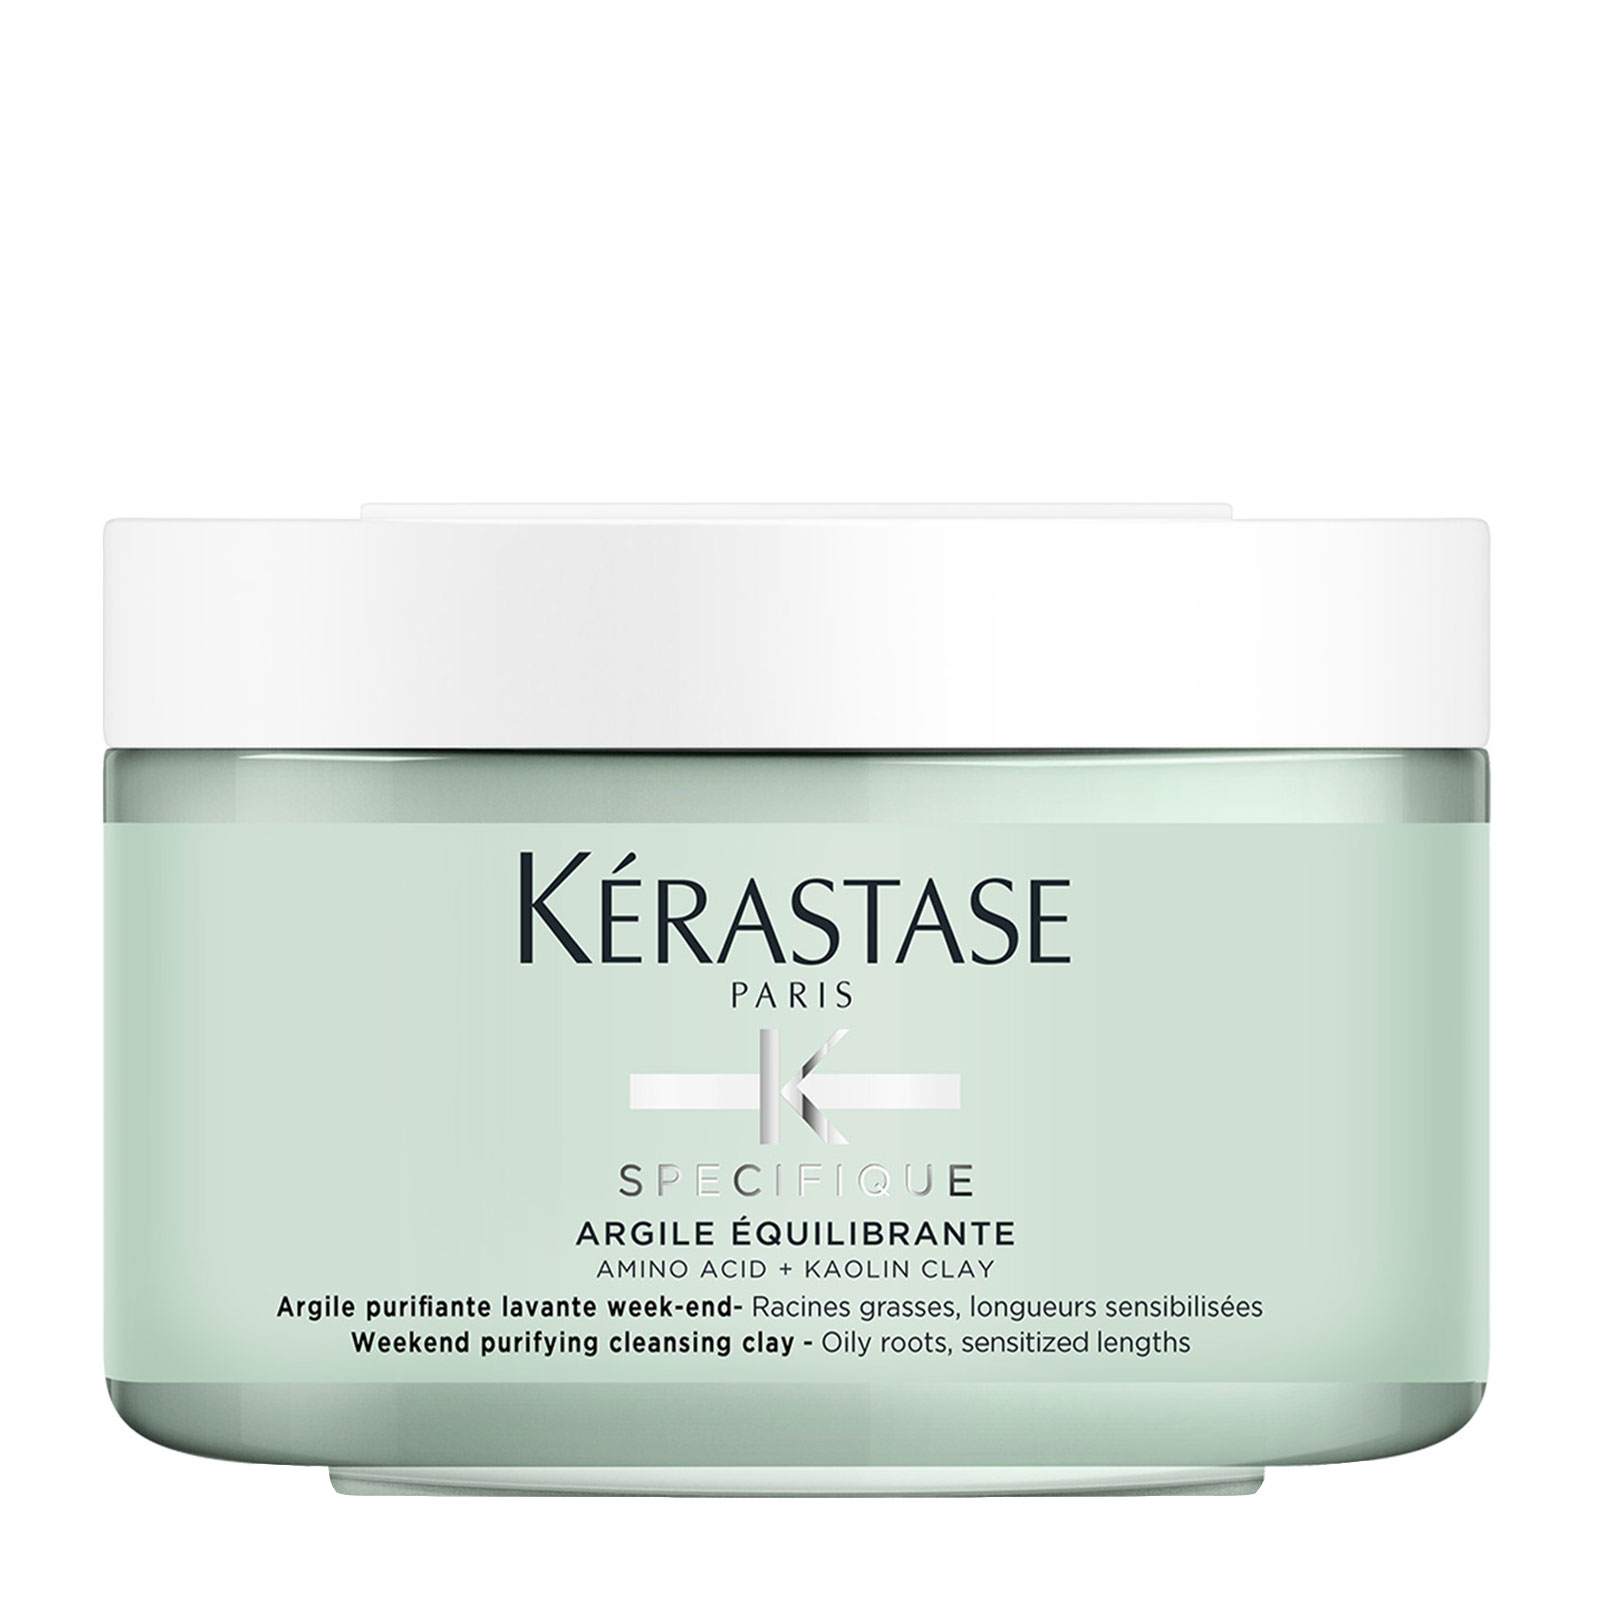 Kerastase Specifique Argile Equilibrante Cleansing Hair Clay 250Ml